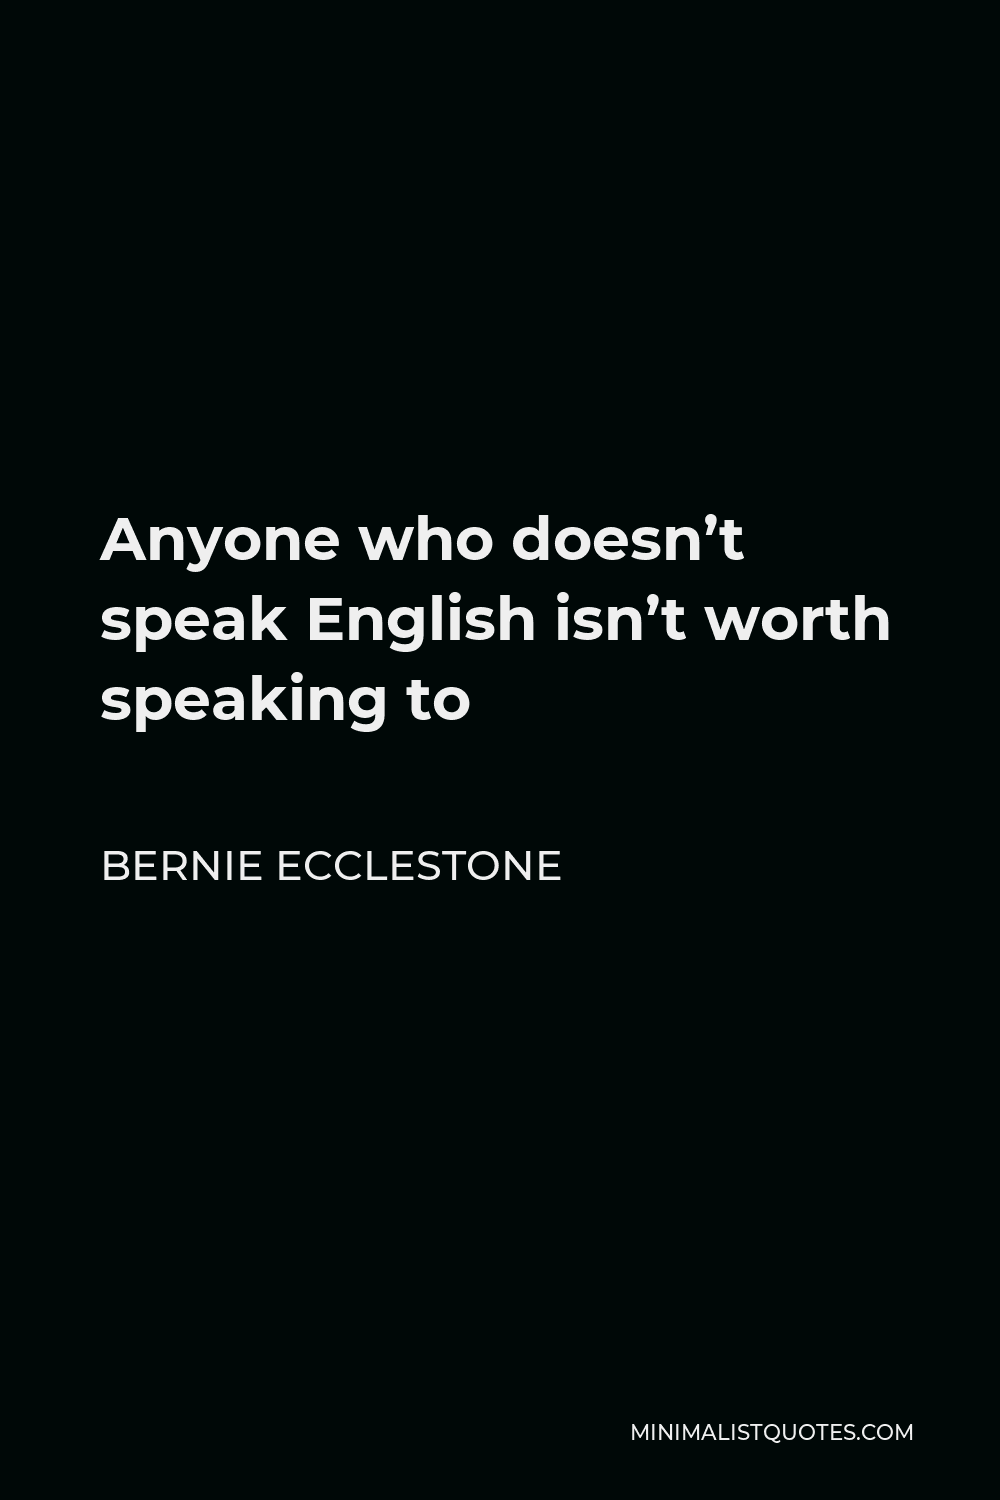 Bernie Ecclestone Quote - Anyone who doesn’t speak English isn’t worth speaking to